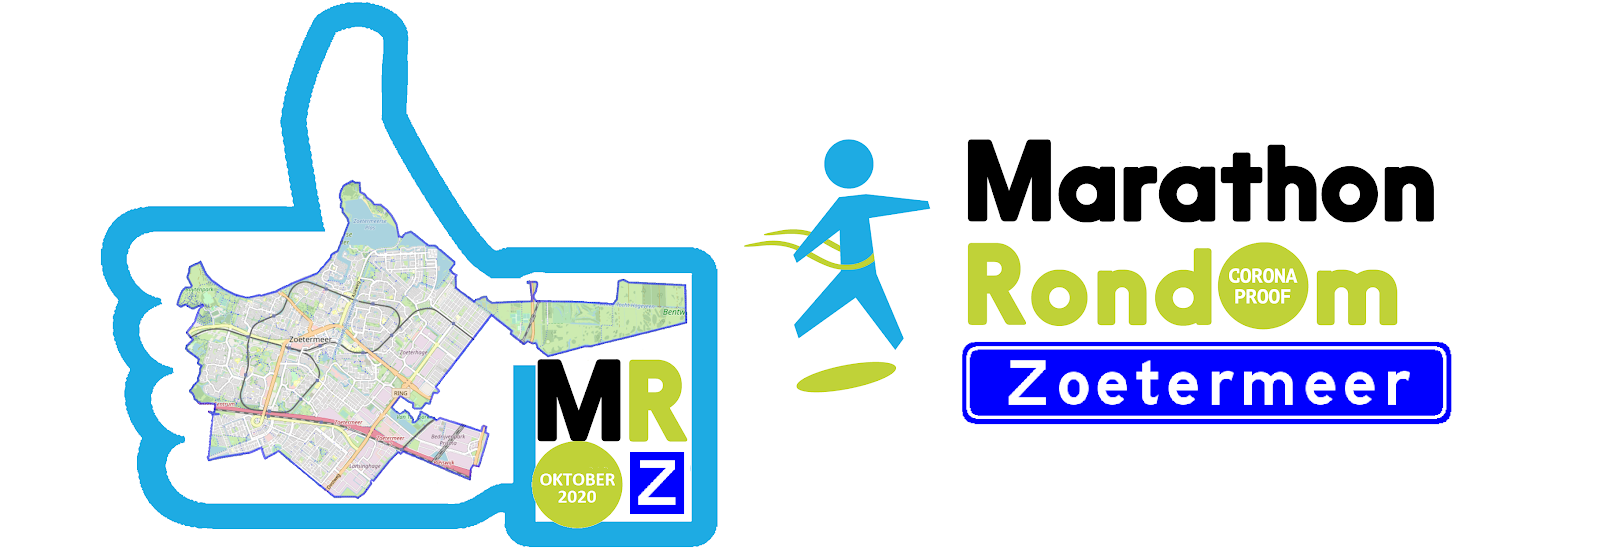 Marathon RondOm Zoetermeer